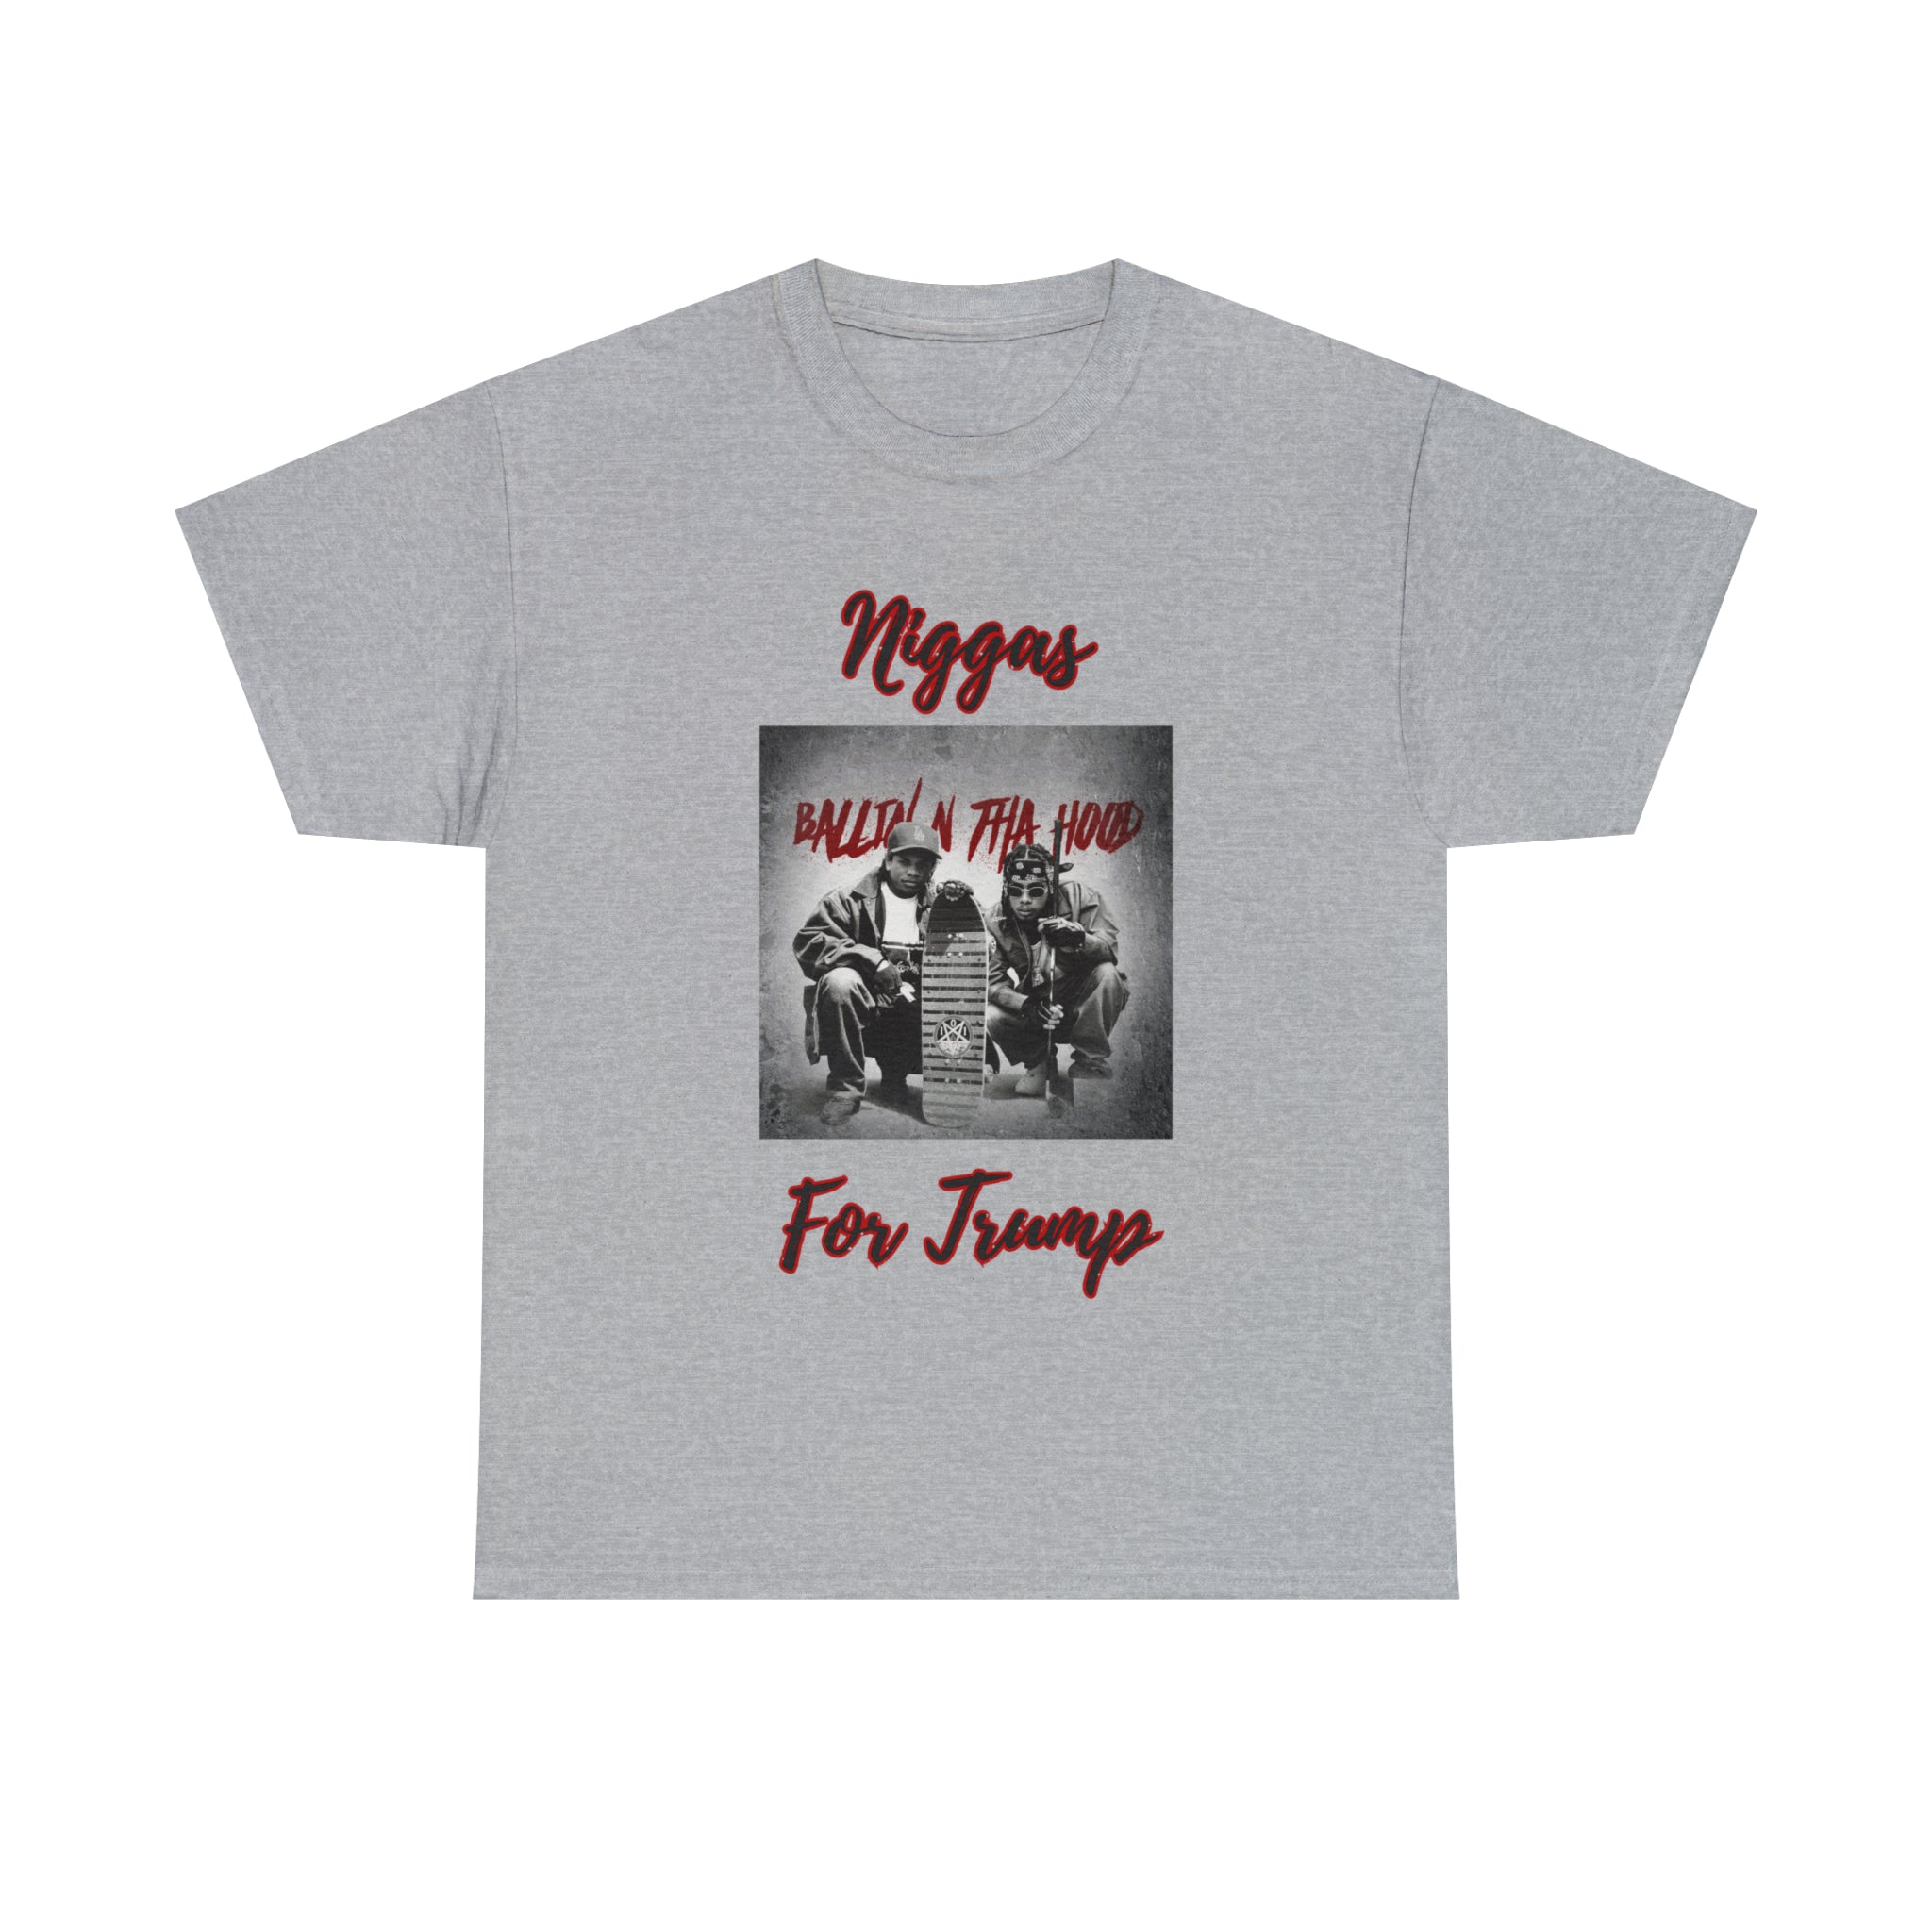 Niggas For Trump T-shirt